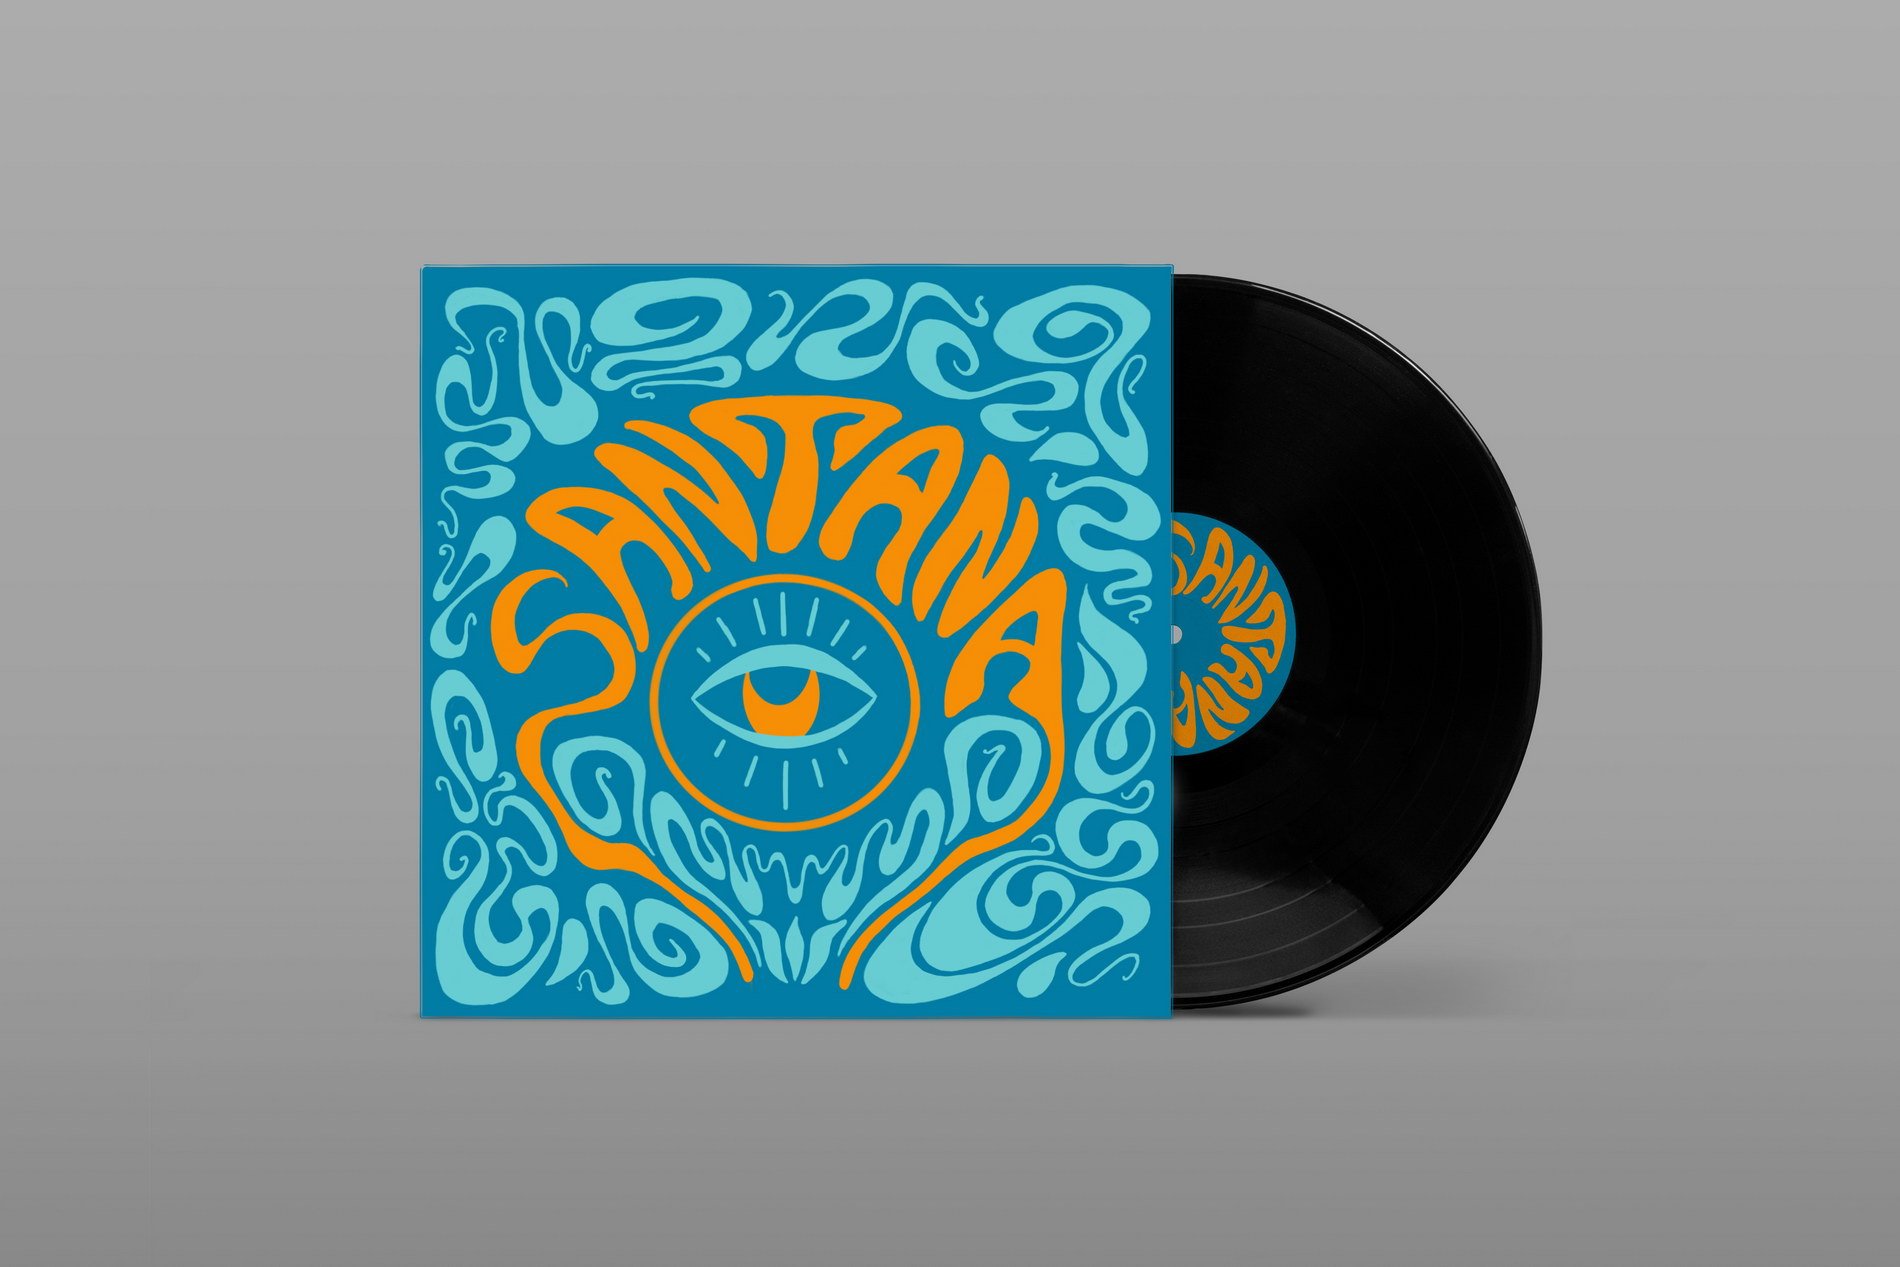 "Santana" album cover design by Katie Yaremkewich